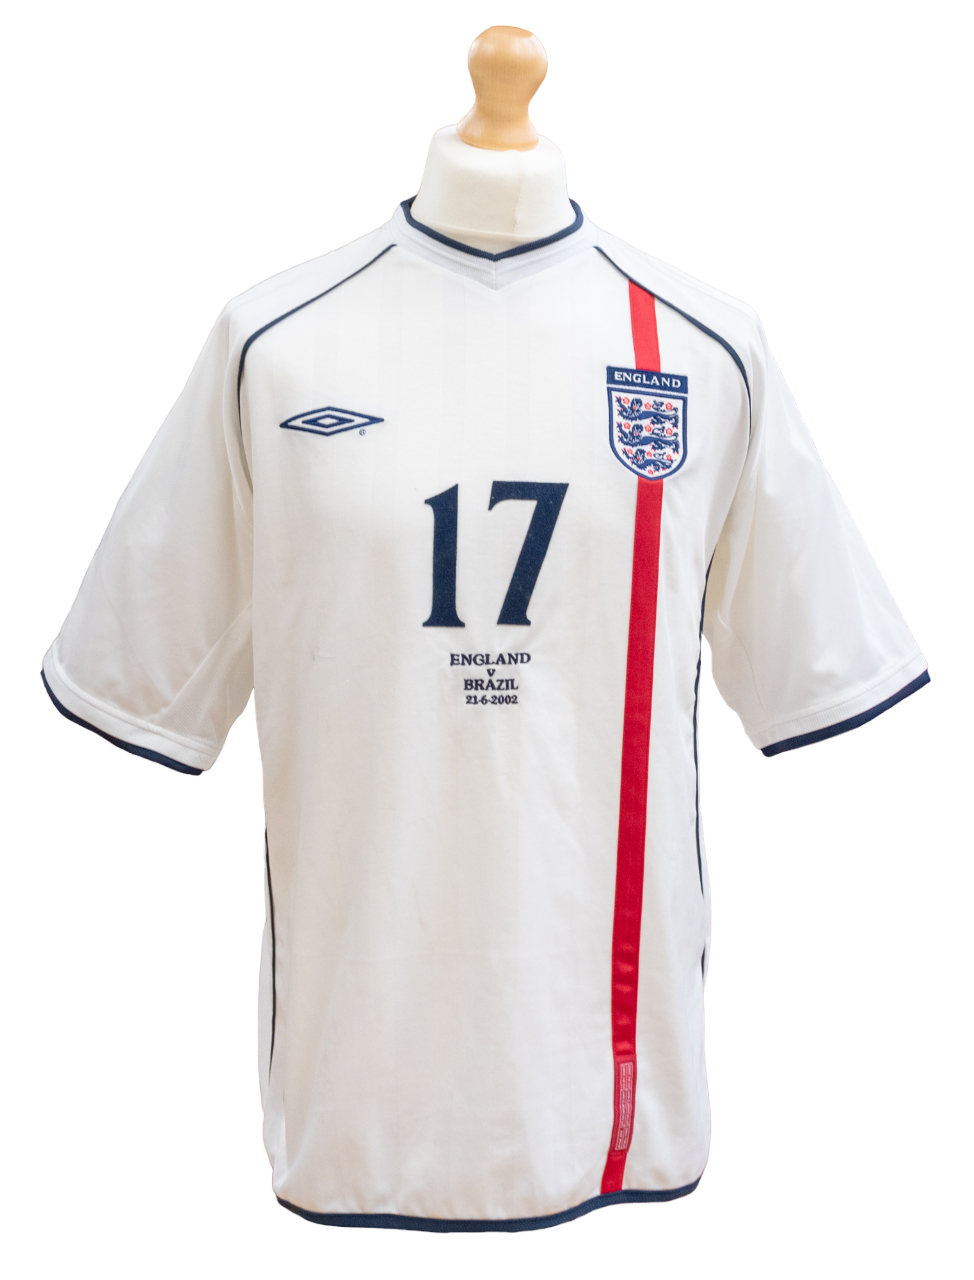 England: An England v. Brazil, World Cup 2002, 21st June 2002, match issued white England shirt.